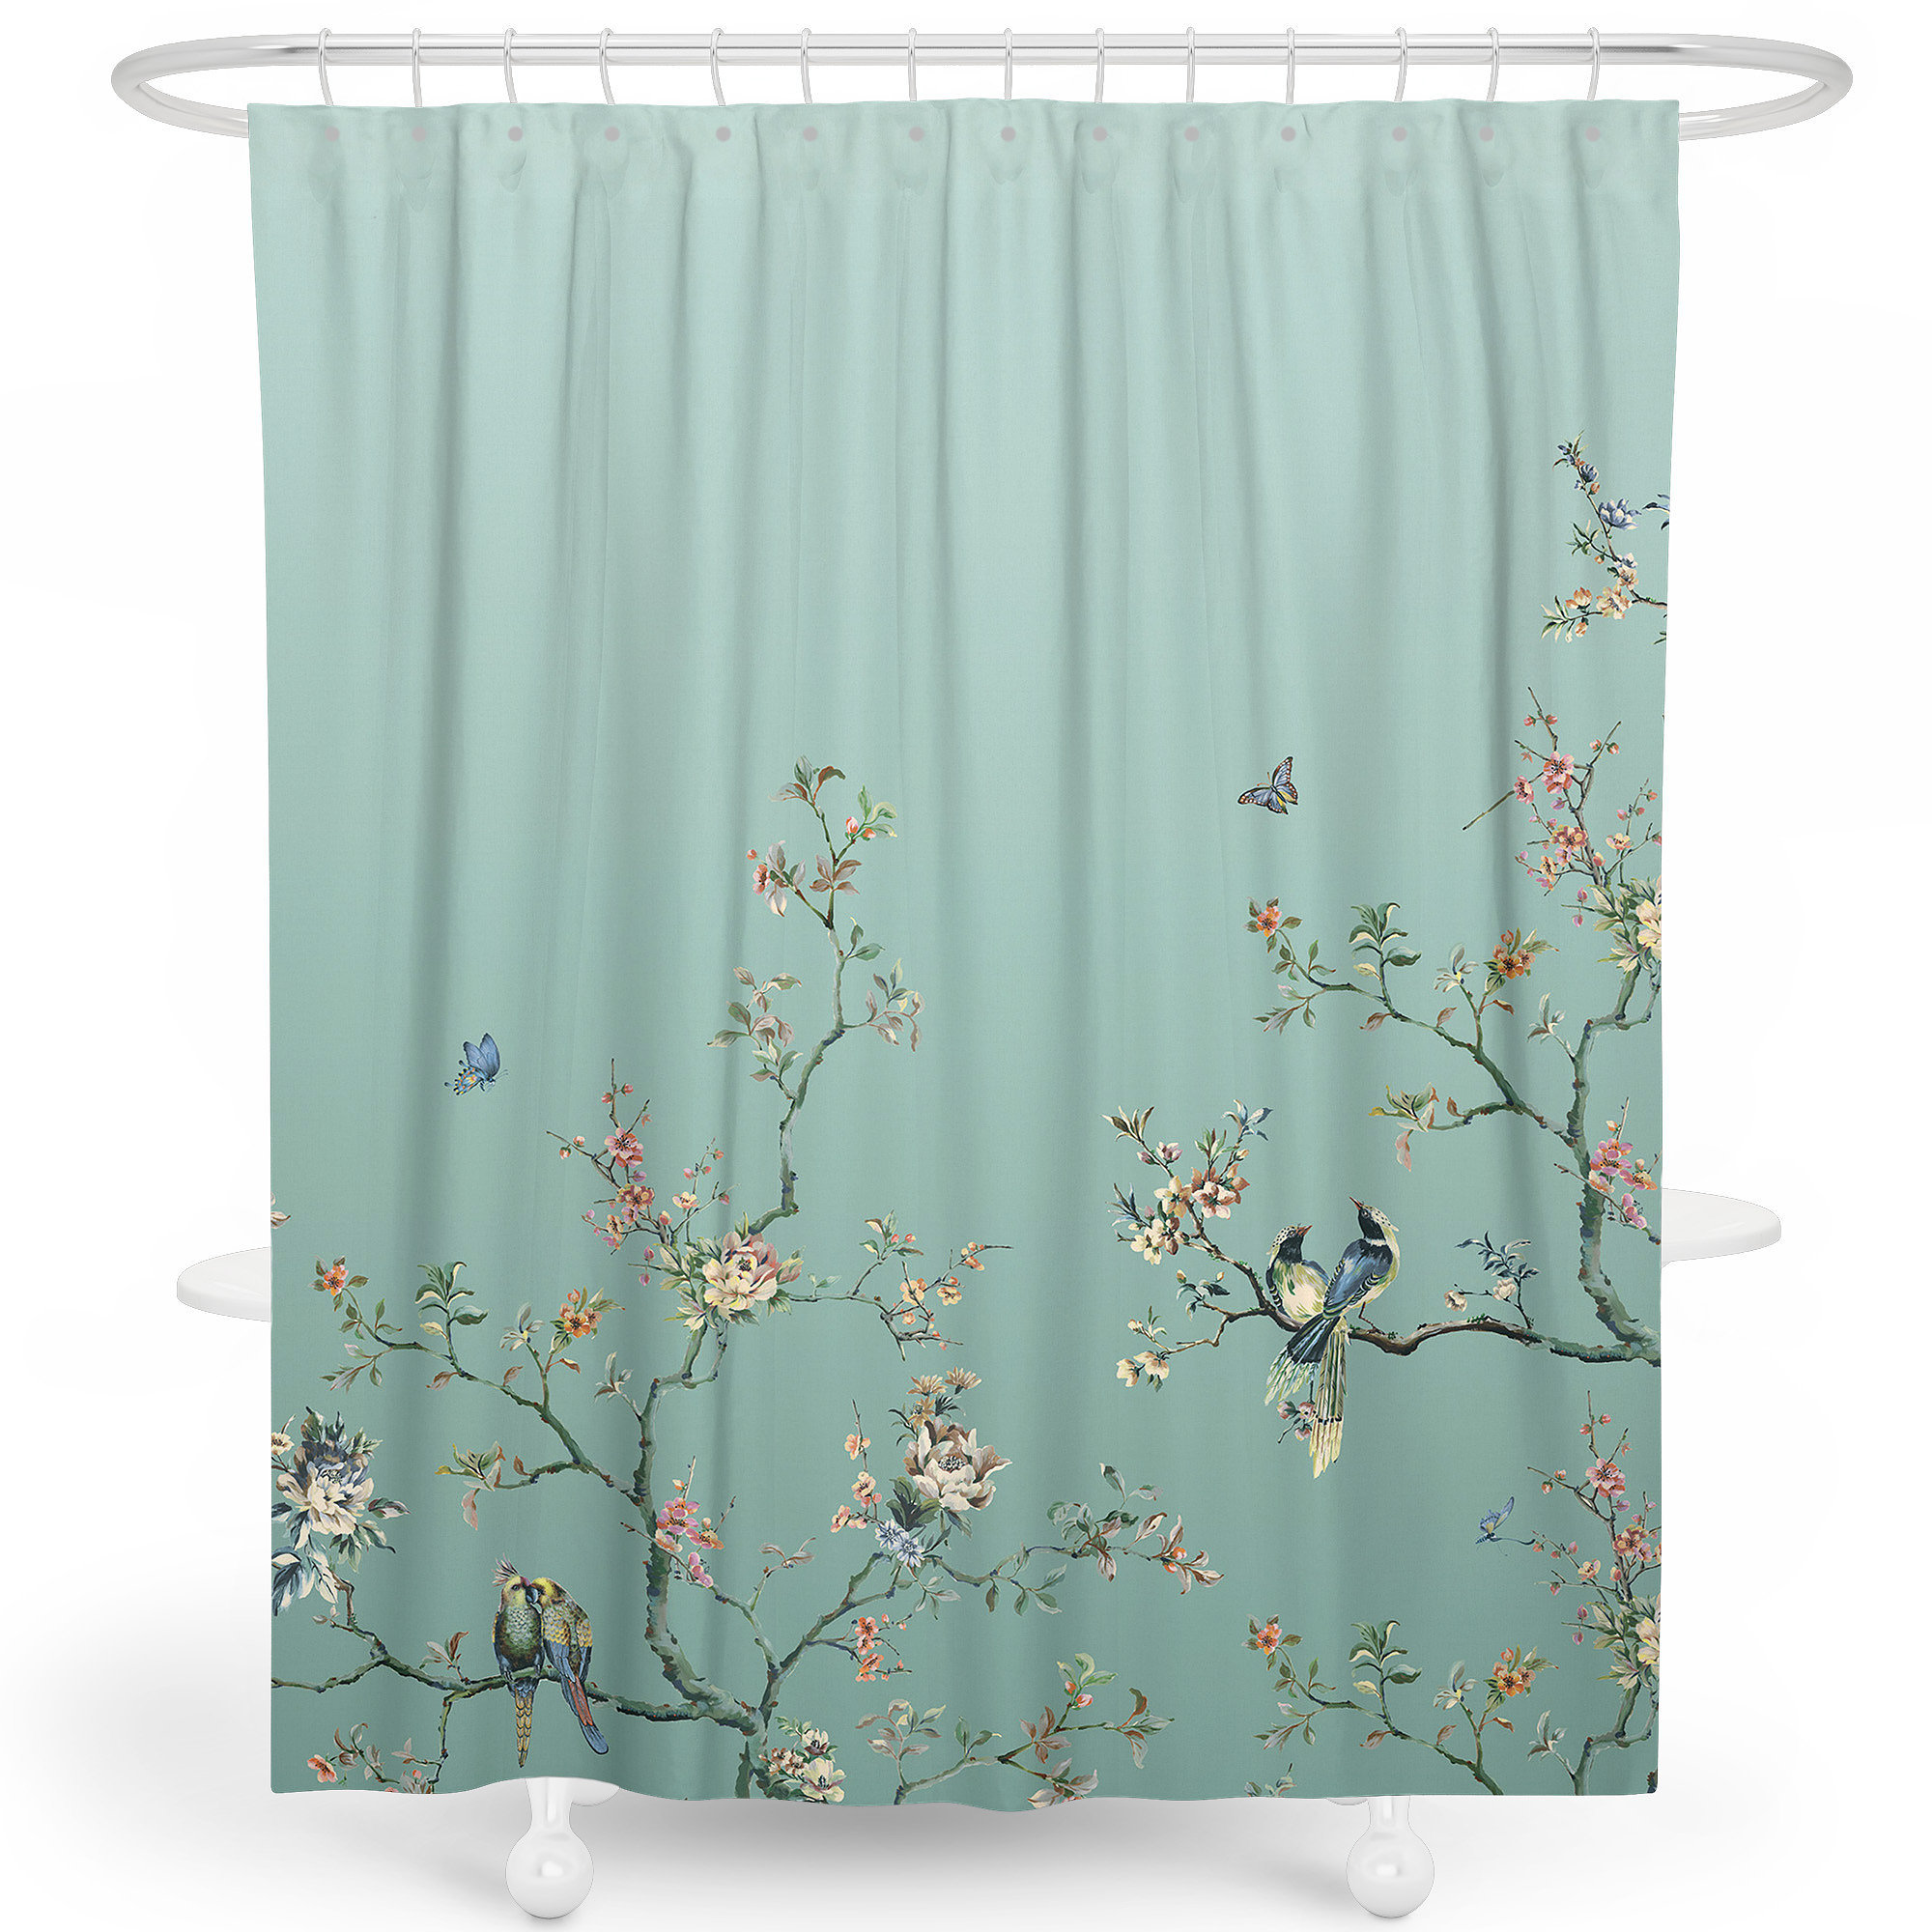 bird shower curtain sets